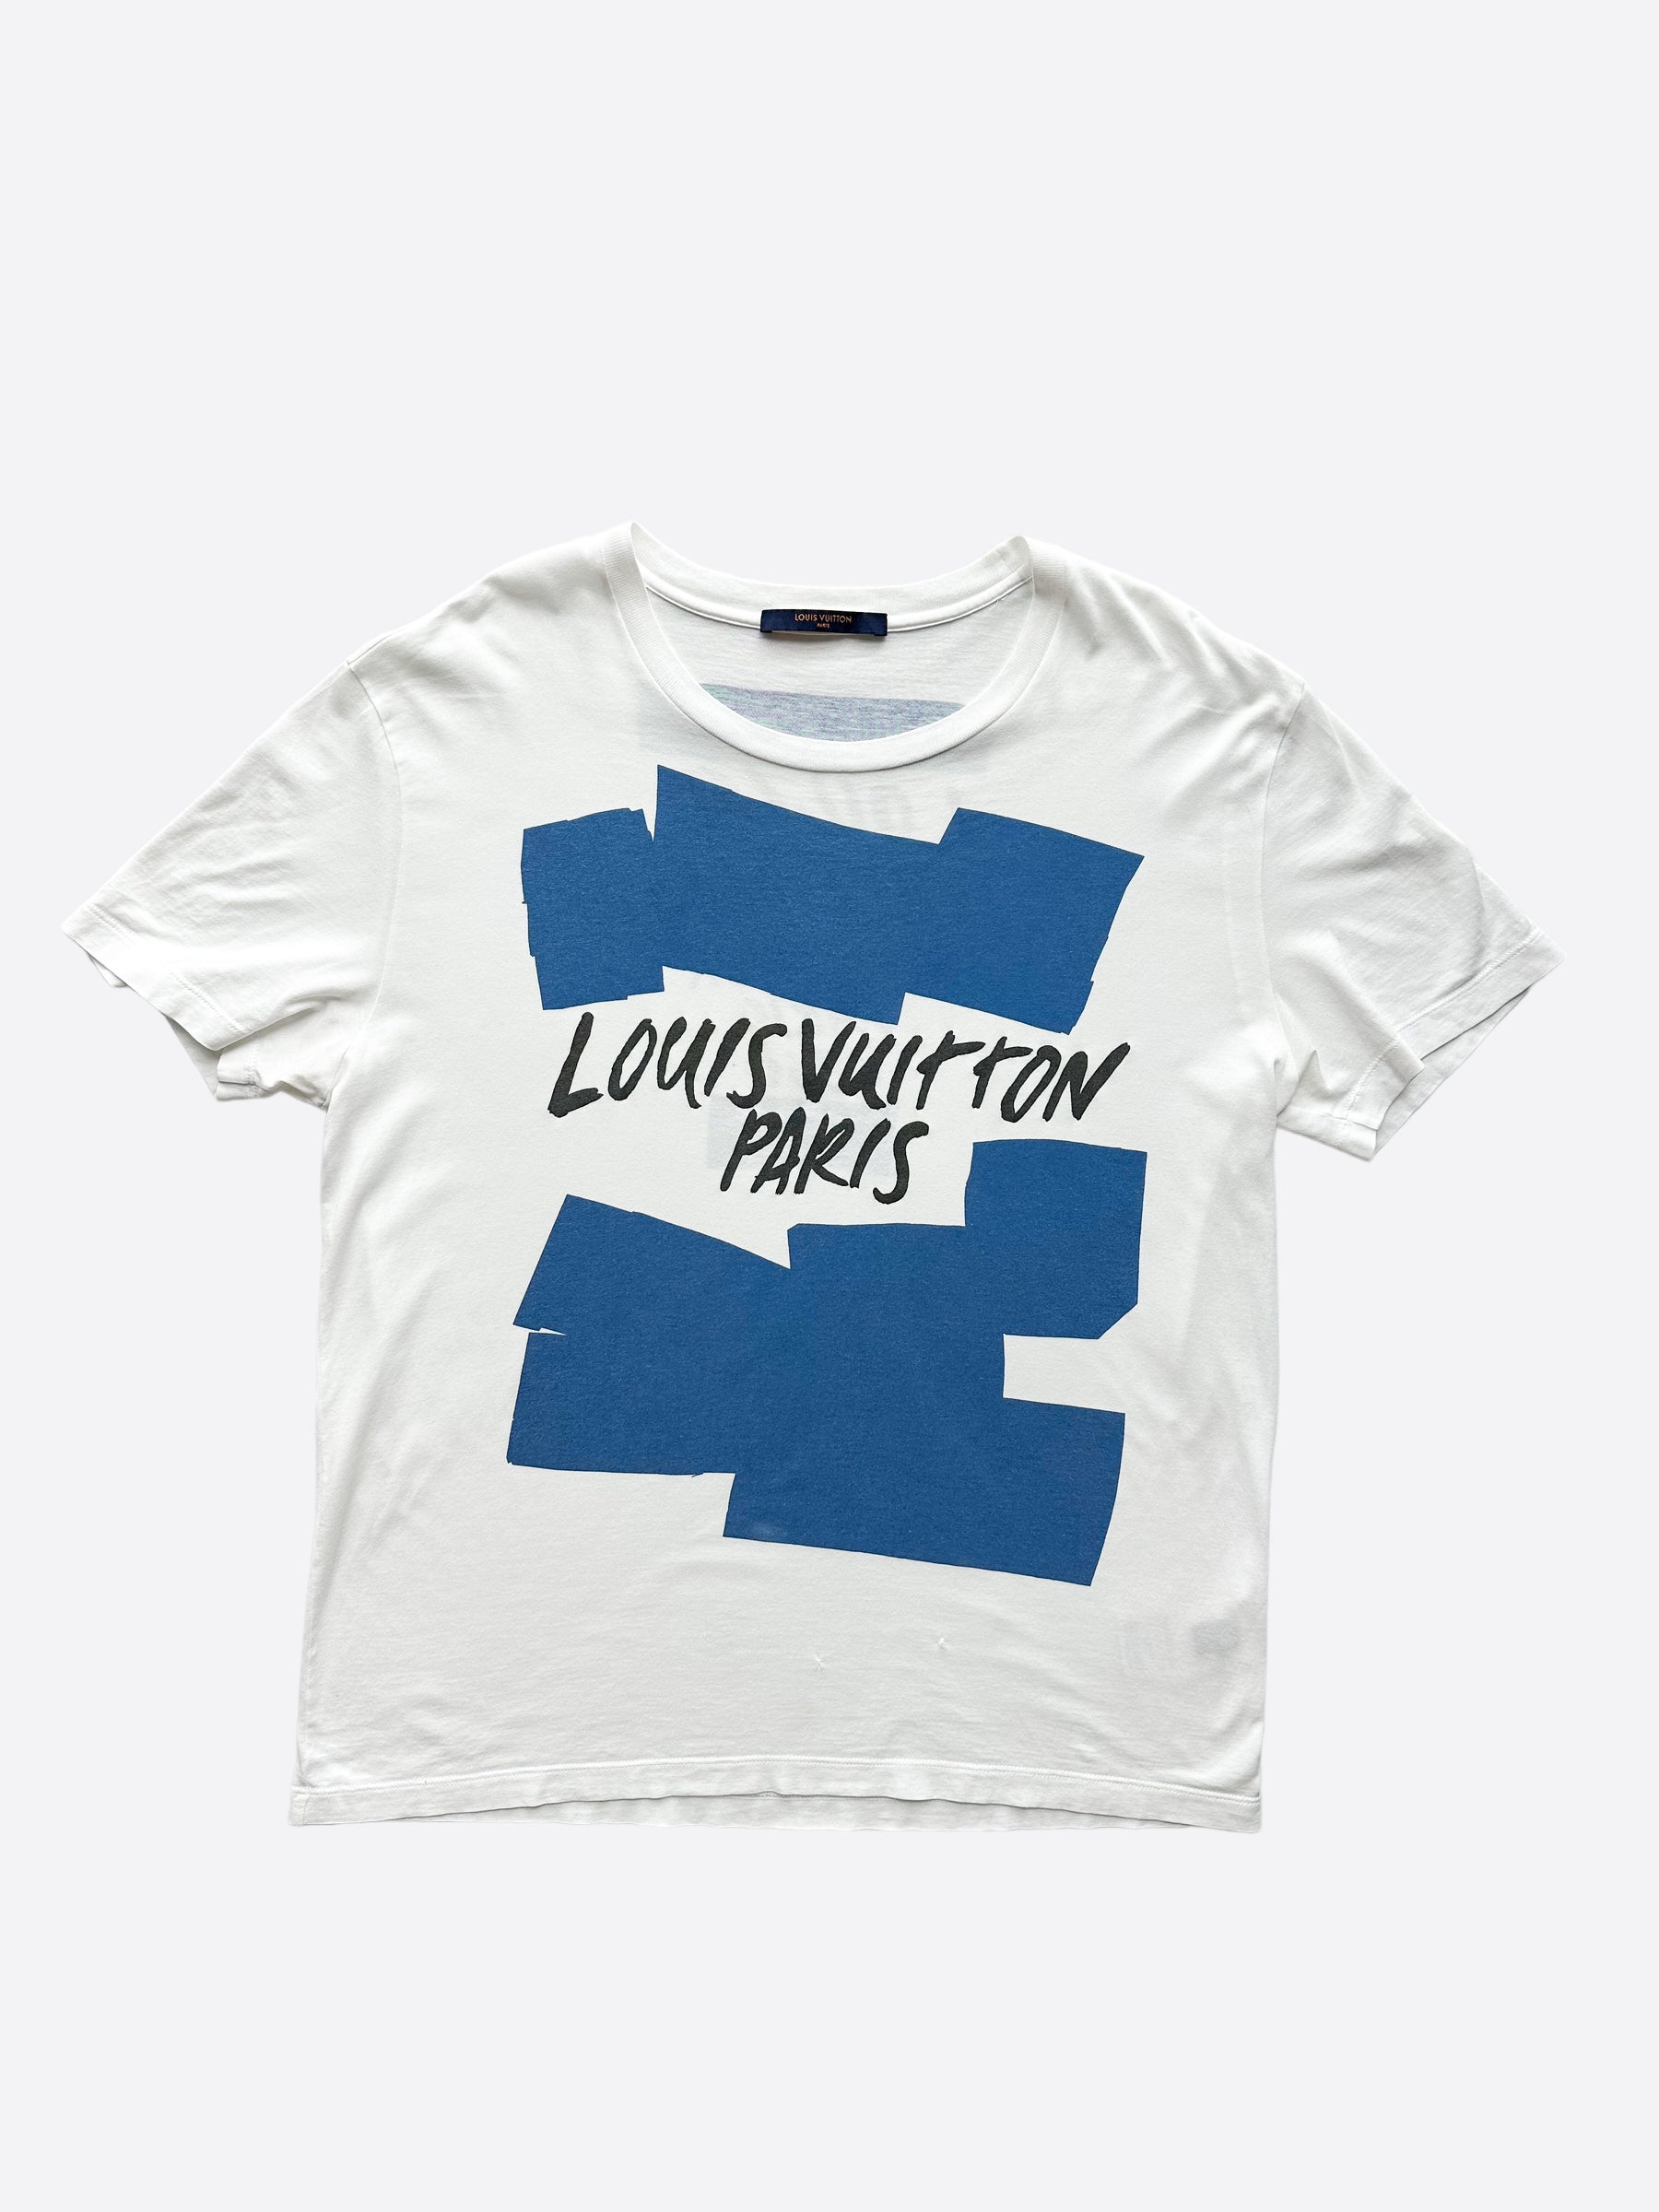 Tee Shirt Louis Vuitton